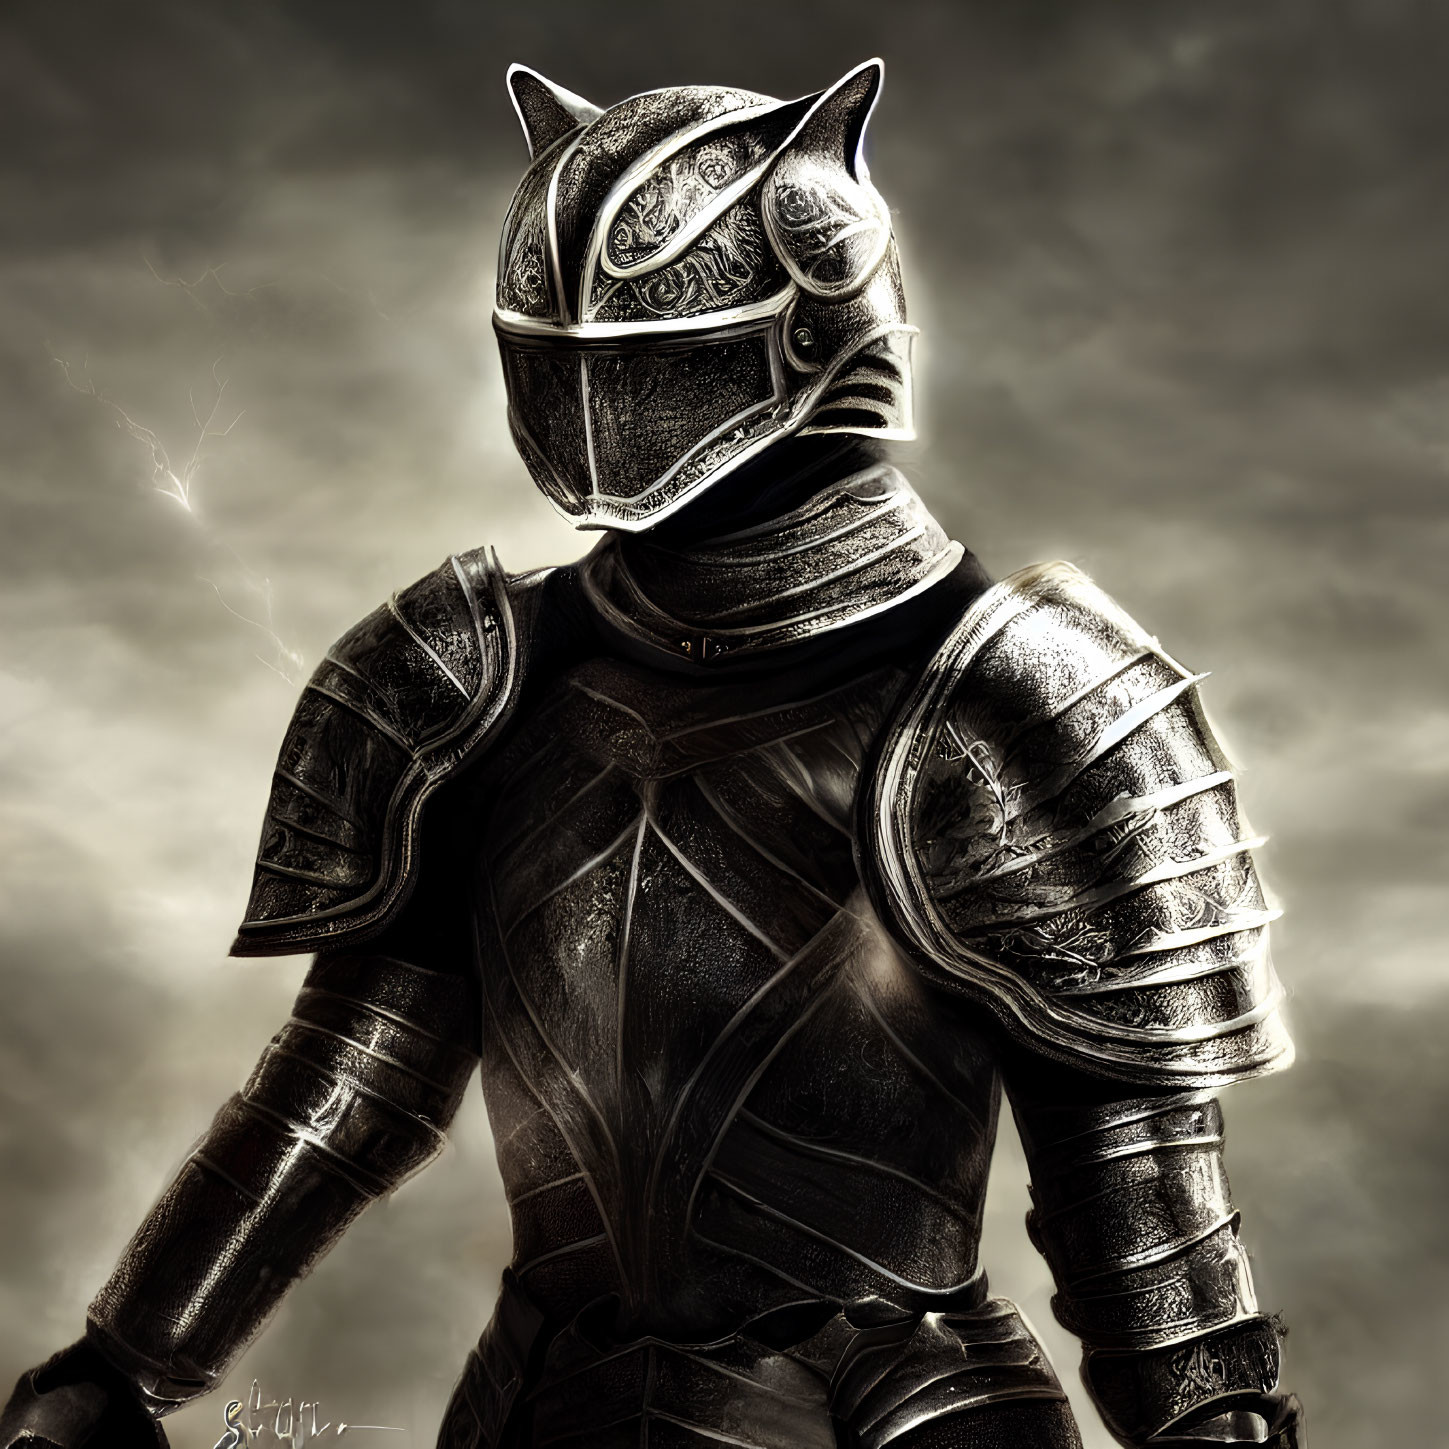 Medieval armor with cat-themed helmet under cloudy sky